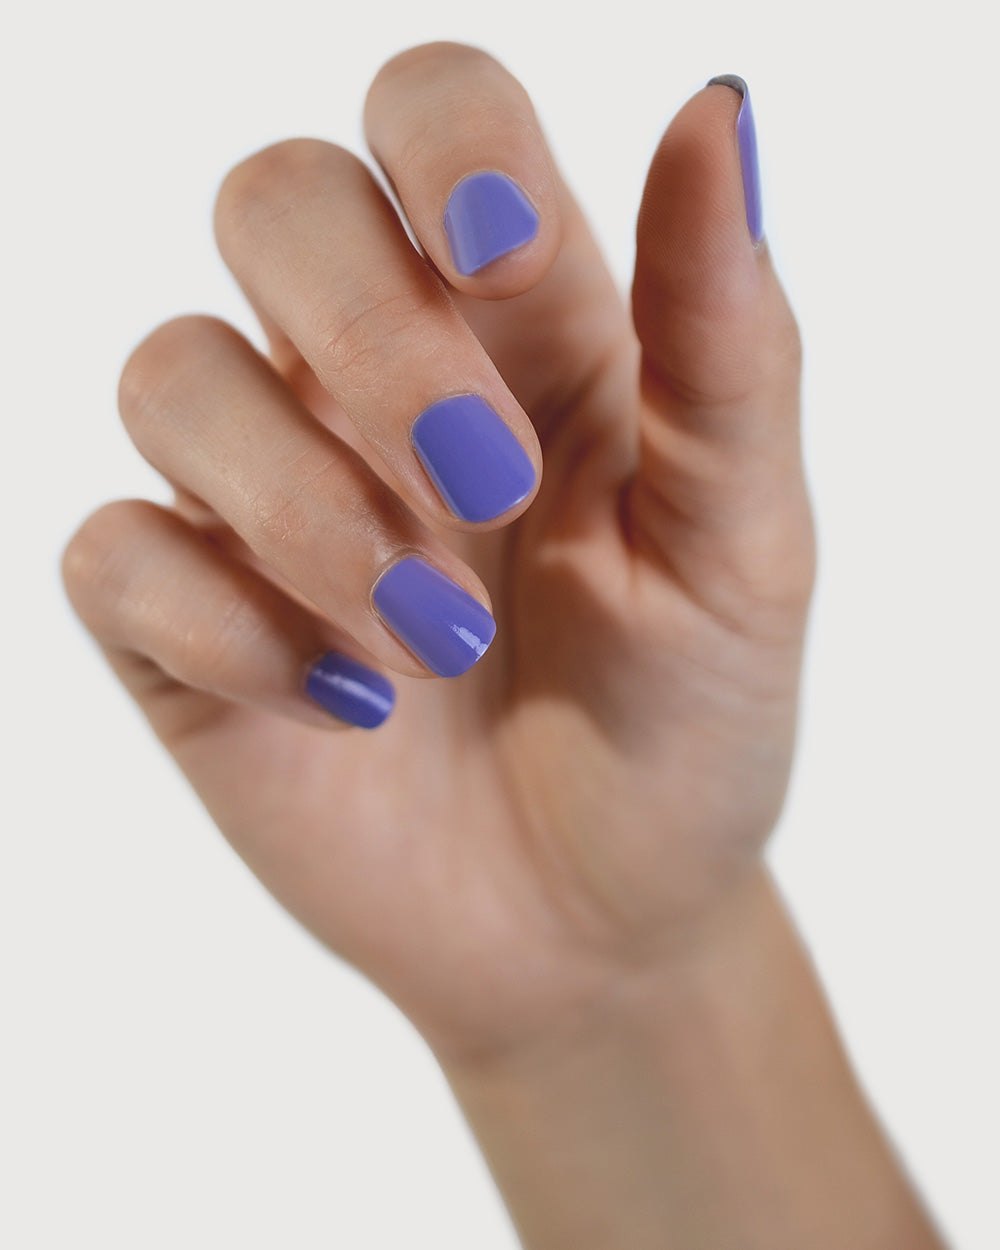 Gentle Midtone Blue Lilac Crème nail polish by Sienna Byron Bay on fair skin tone hand.